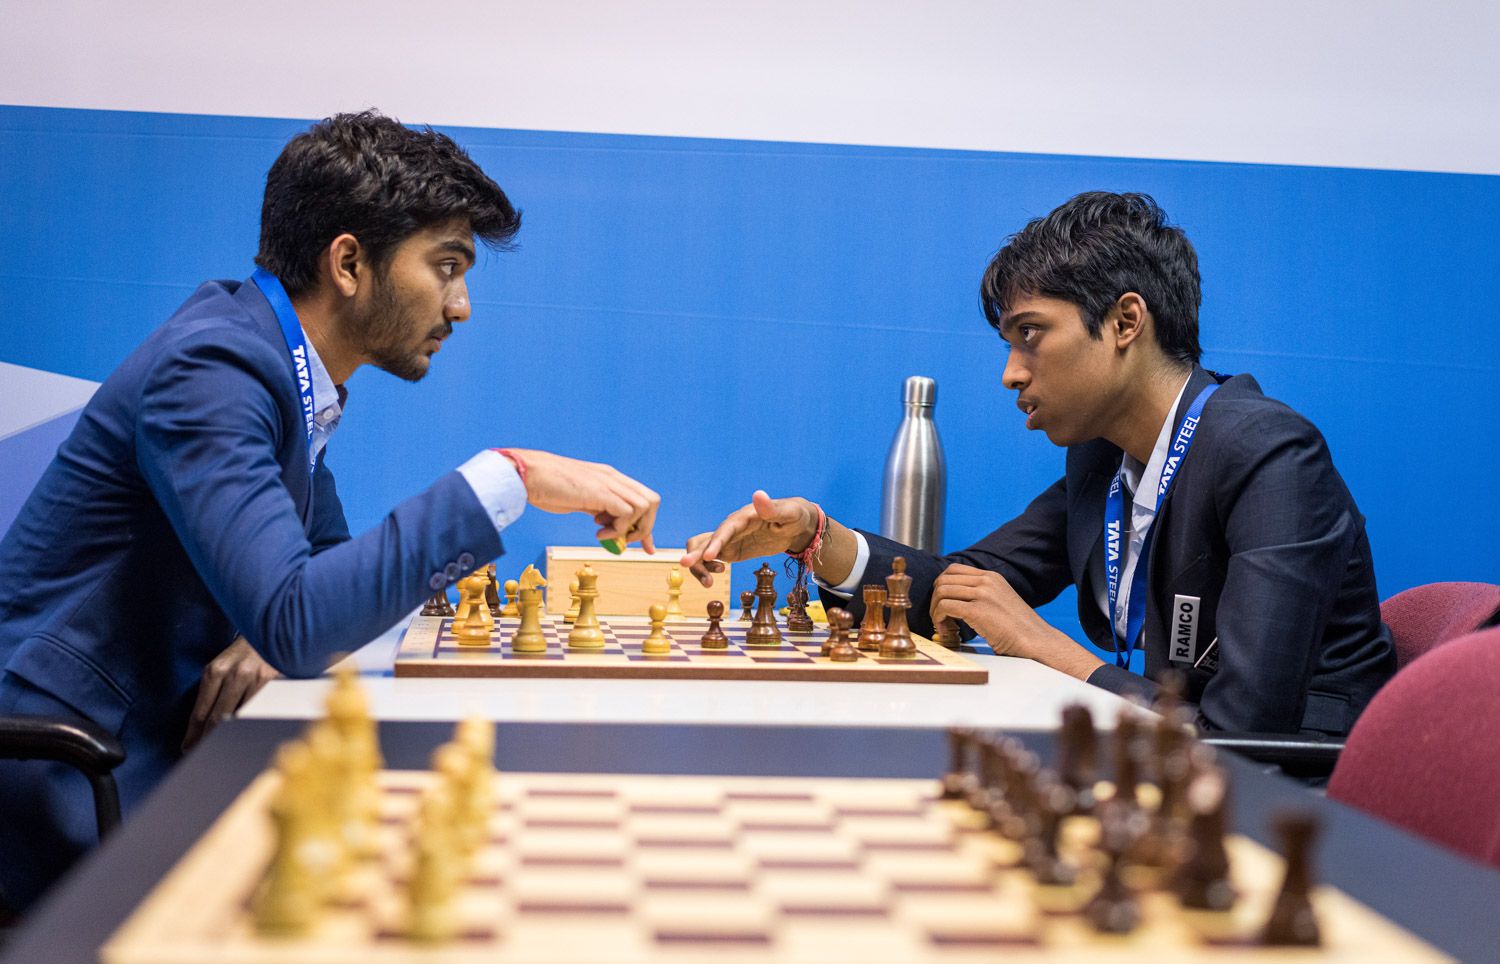 Tata Steel Chess, ronda 13: Carlsen se corona campeón tras los